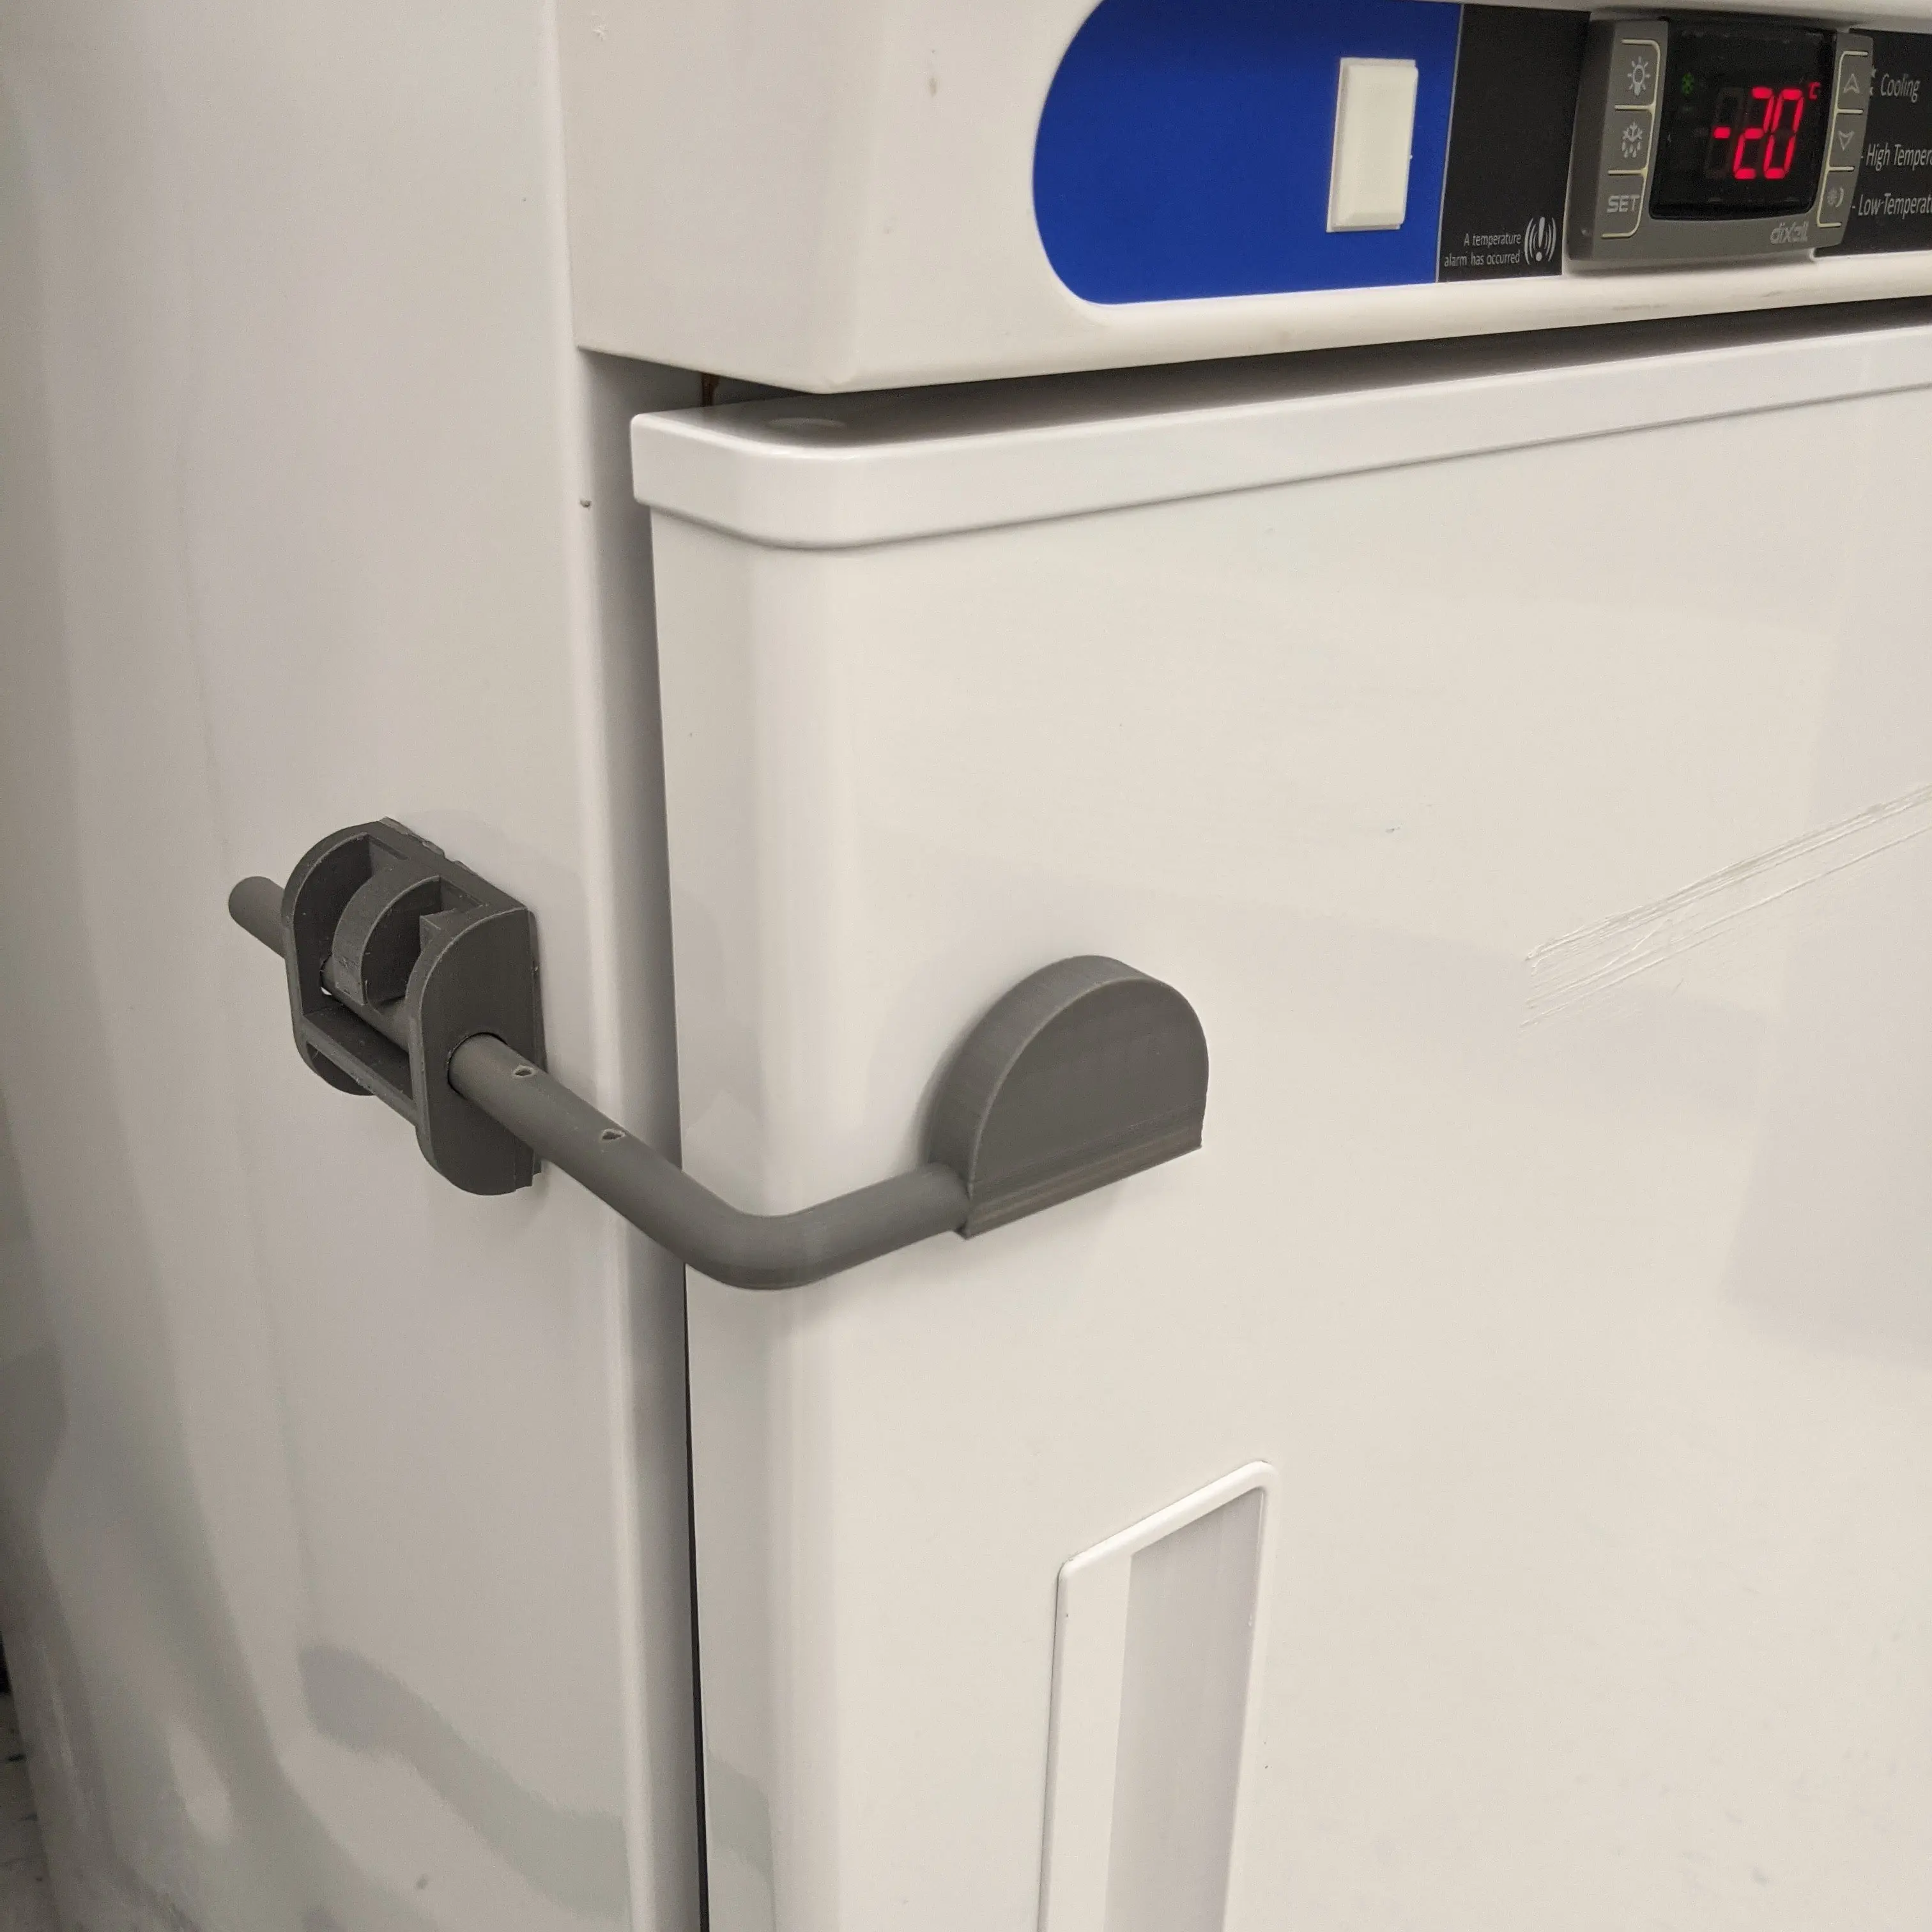 The shutter mounted on a fridge.